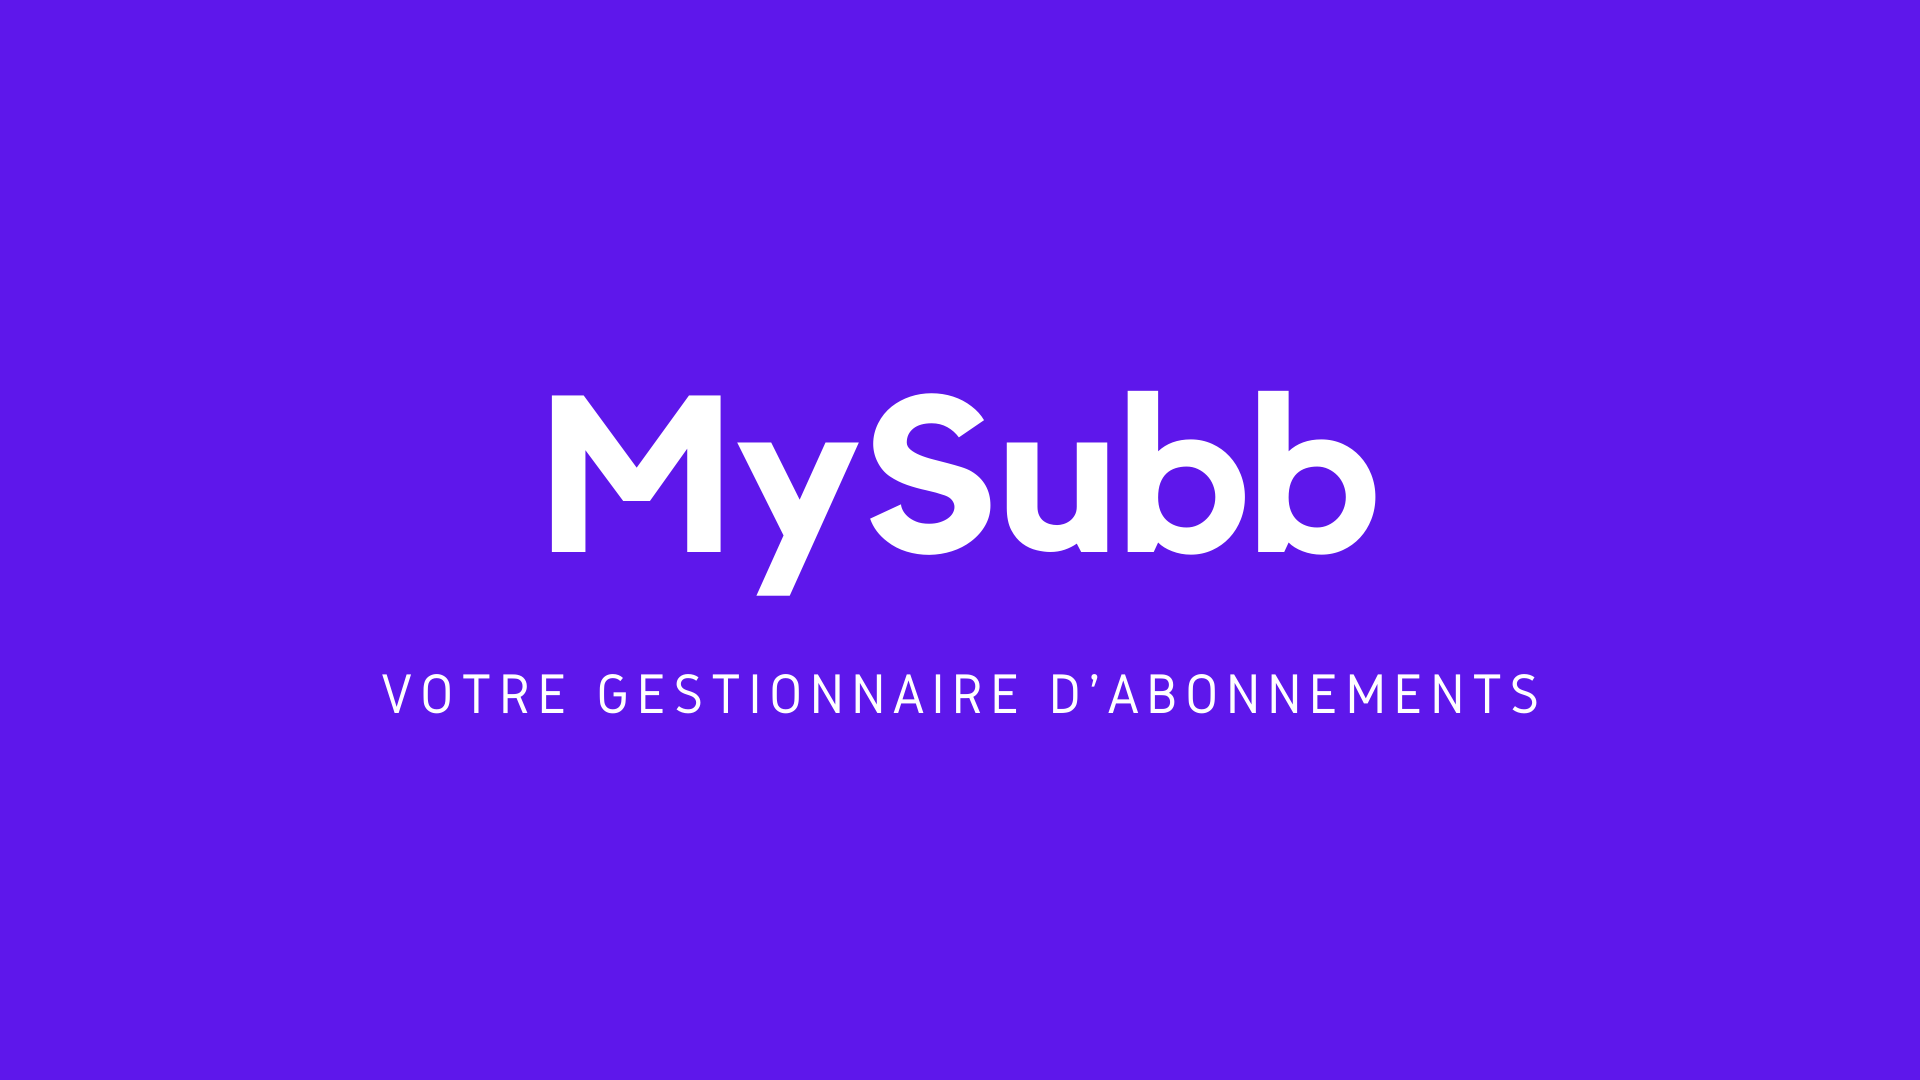 MySubb